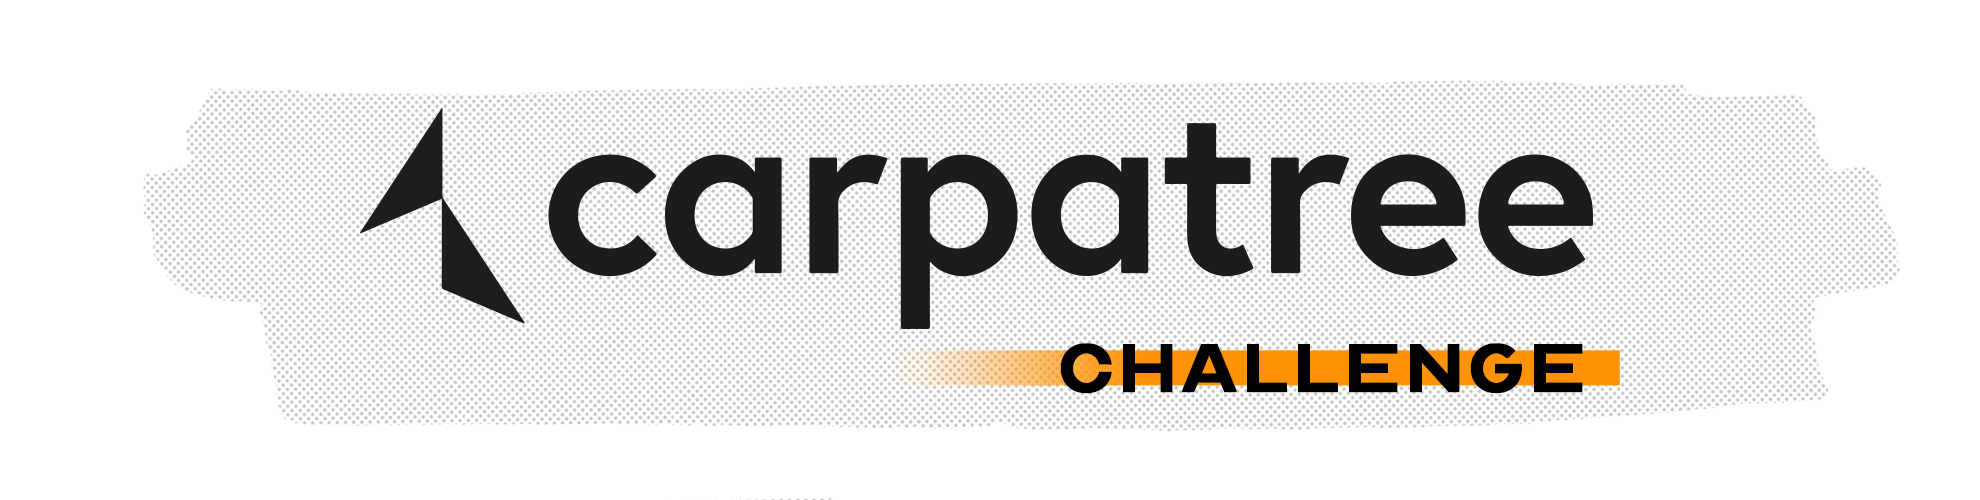 Carpatree Challenge